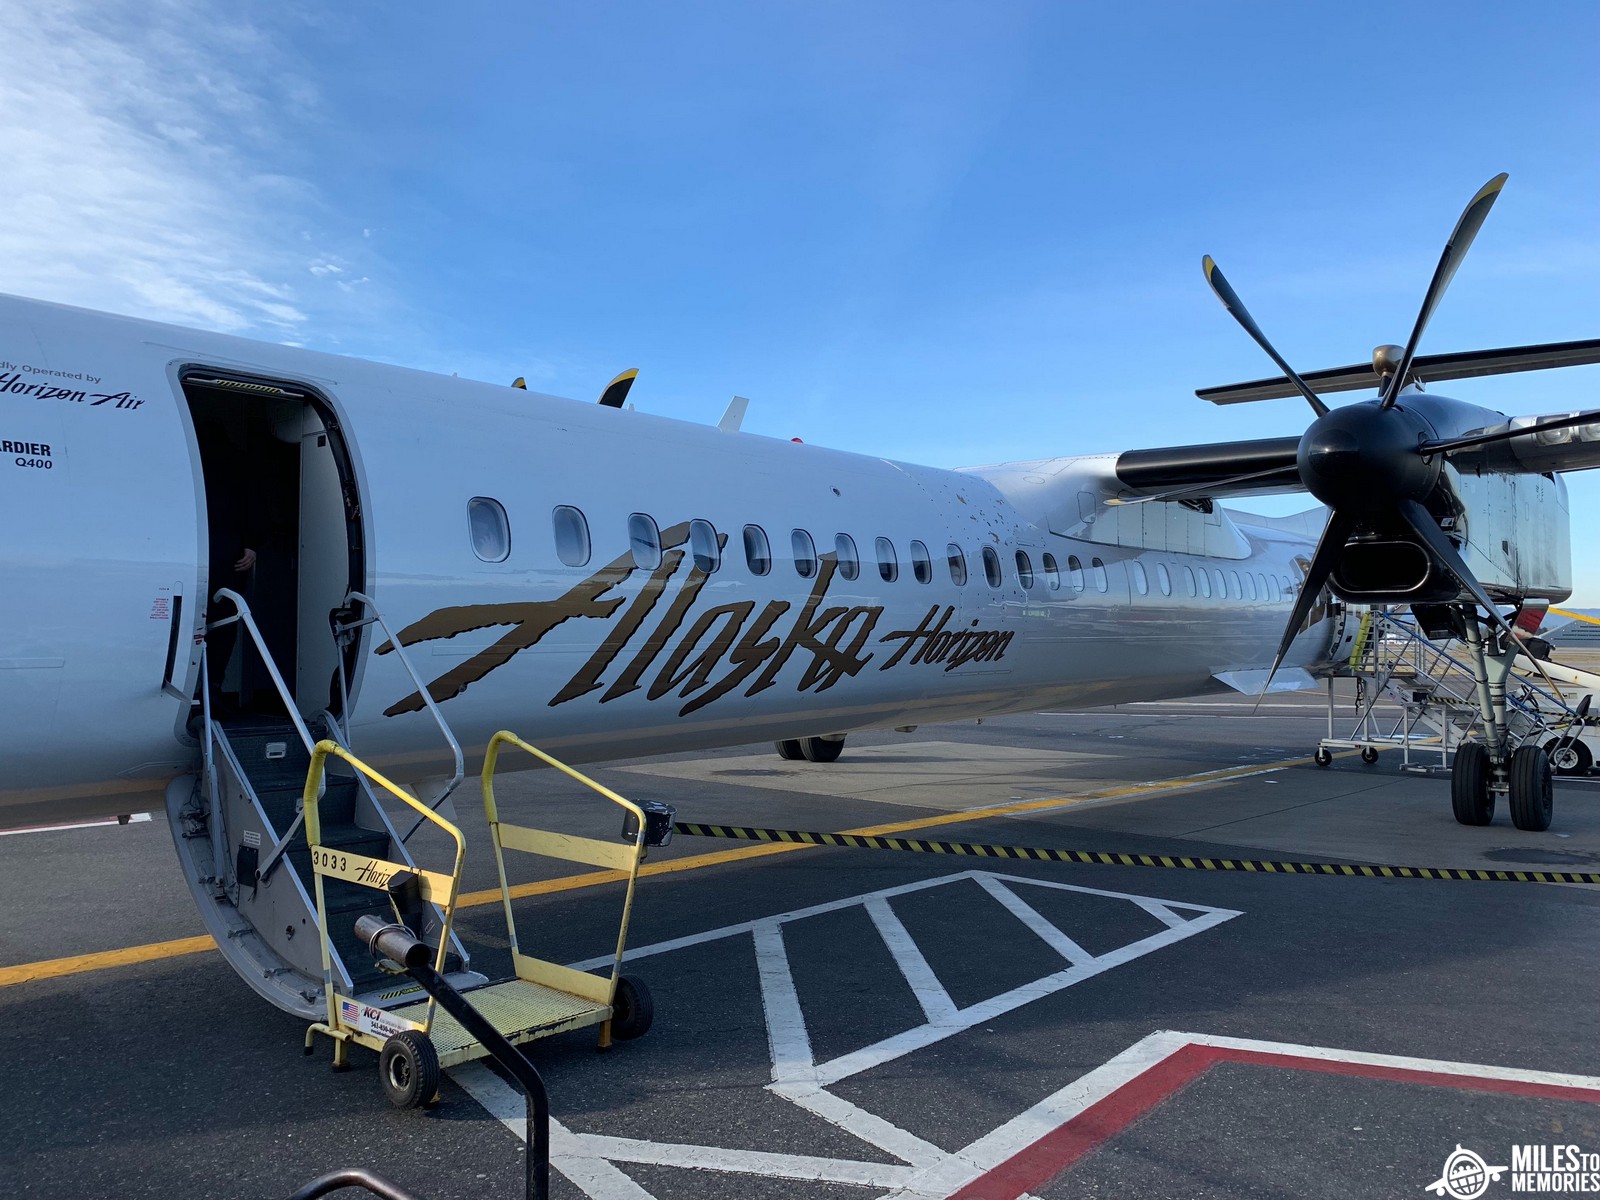 Alaska Airlines Credit Card Gets New Benefits